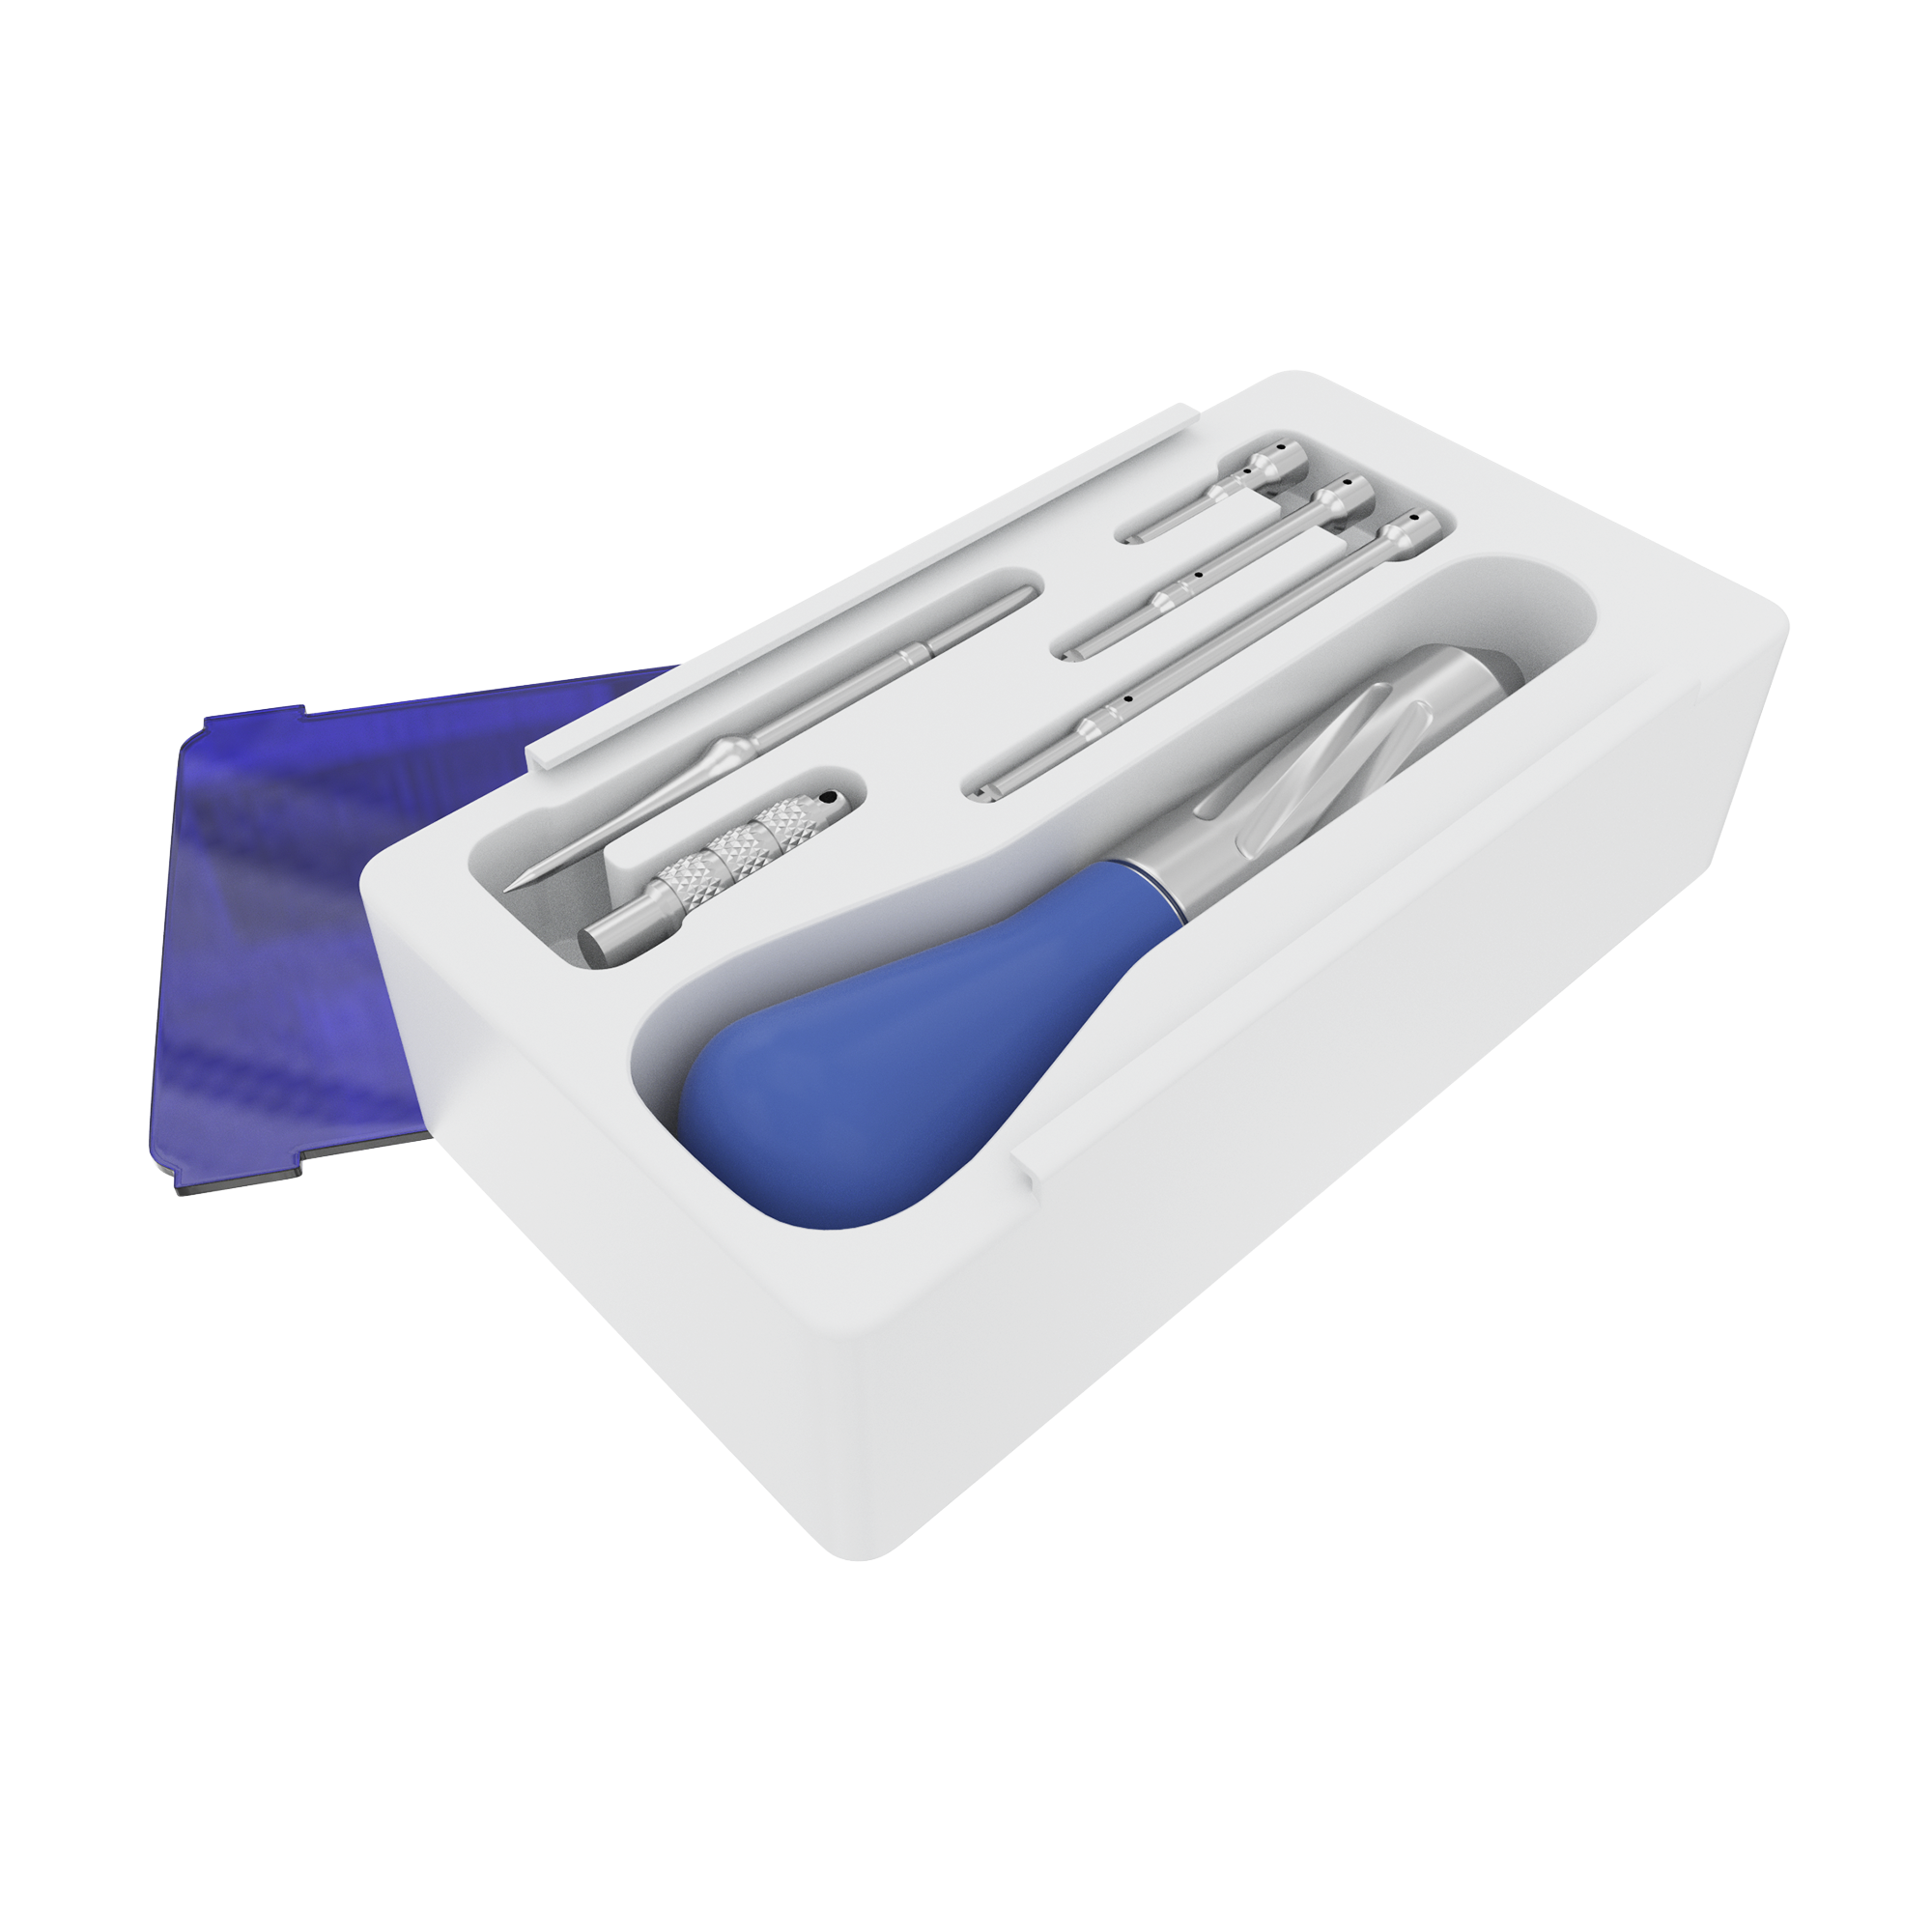 DSI Miniscrew Universal Tool Kit TAD Instruments Autoclavable